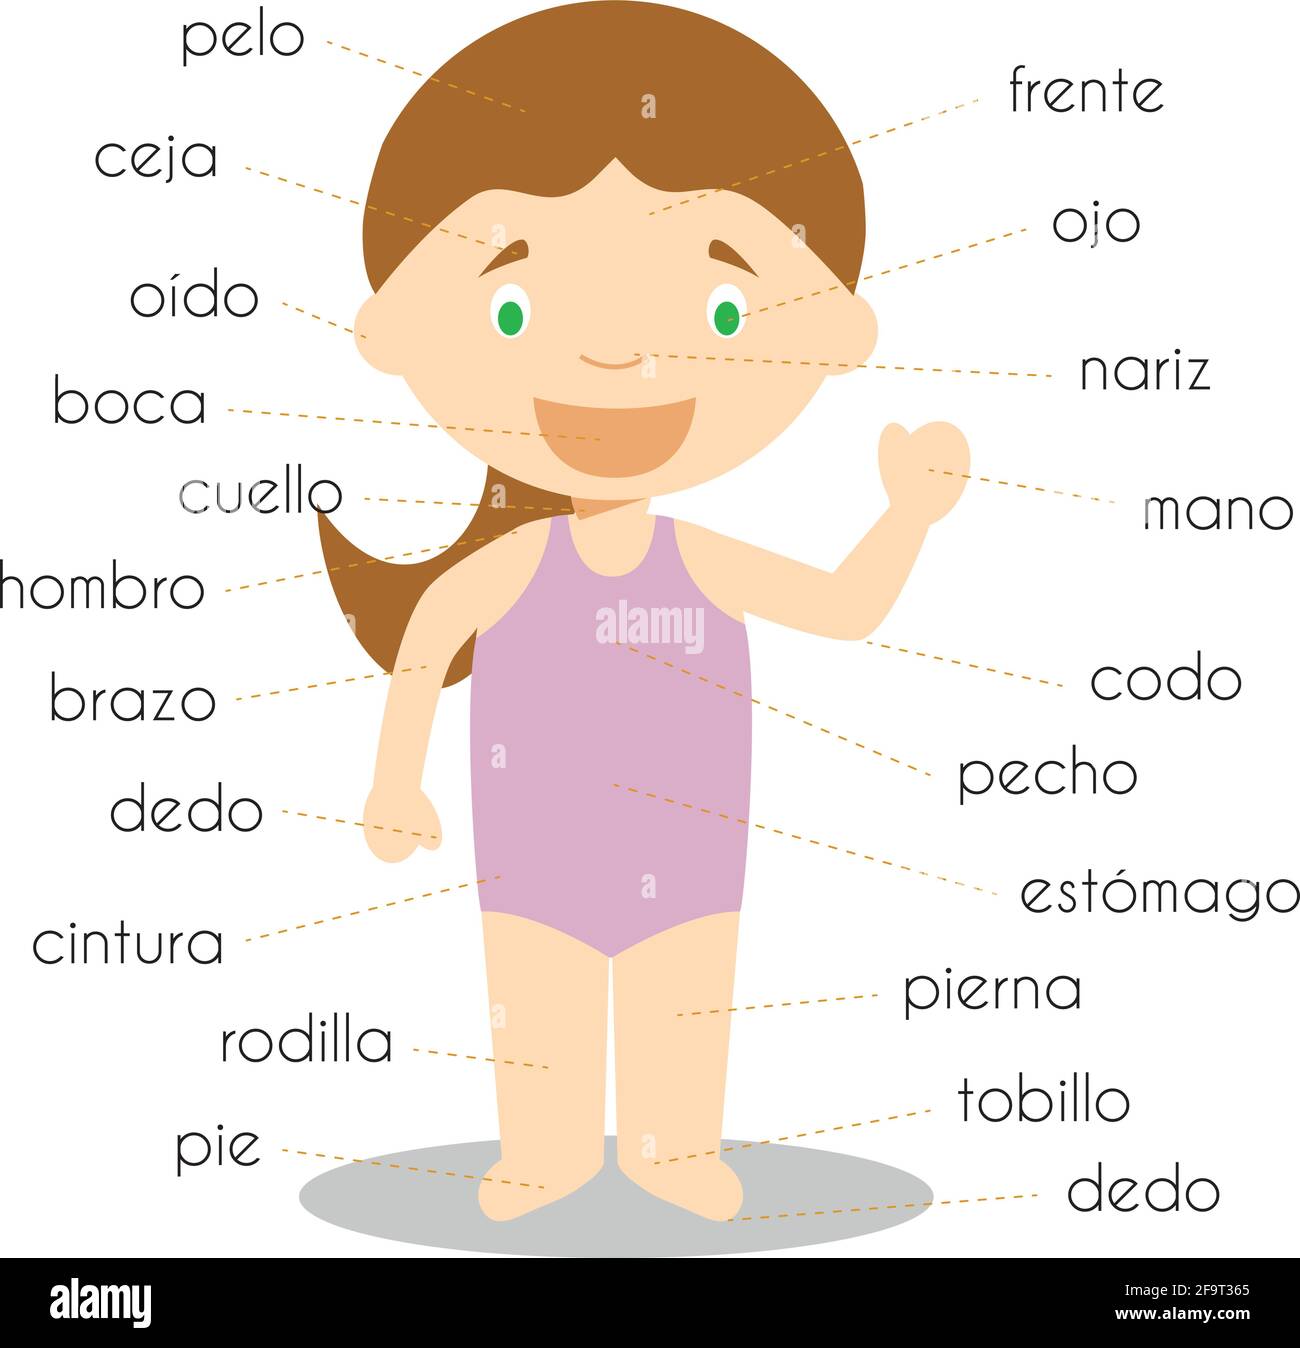 Vokabular menschlicher Körperteile auf spanisch Vektor Illustration Stock Vektor